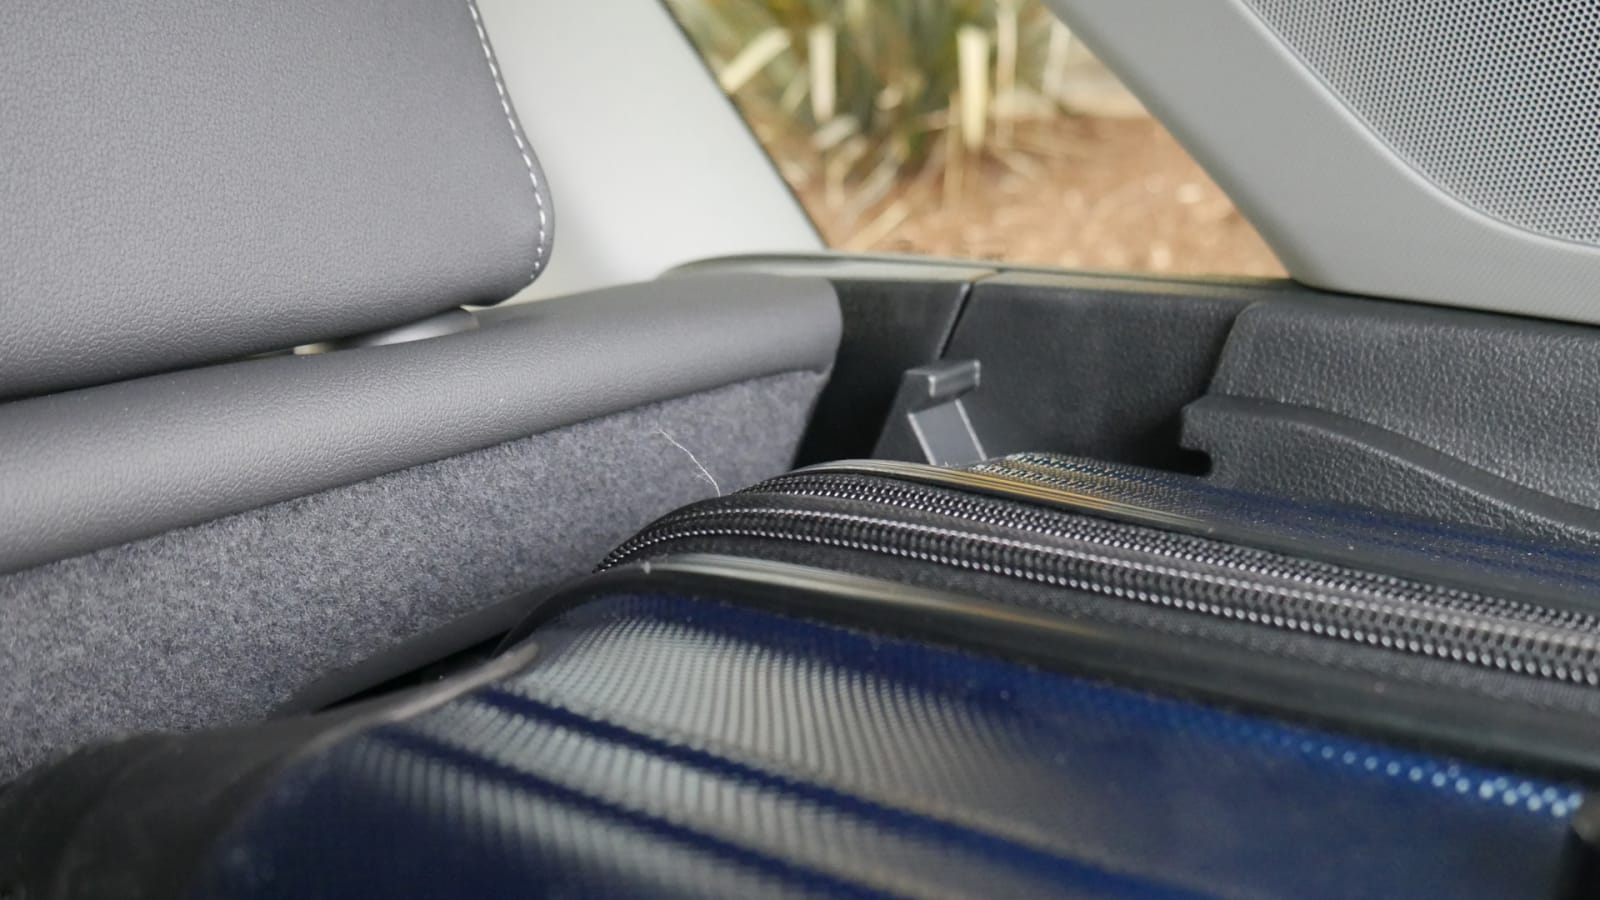 2021 Audi Q5 luggage test cargo cover slot